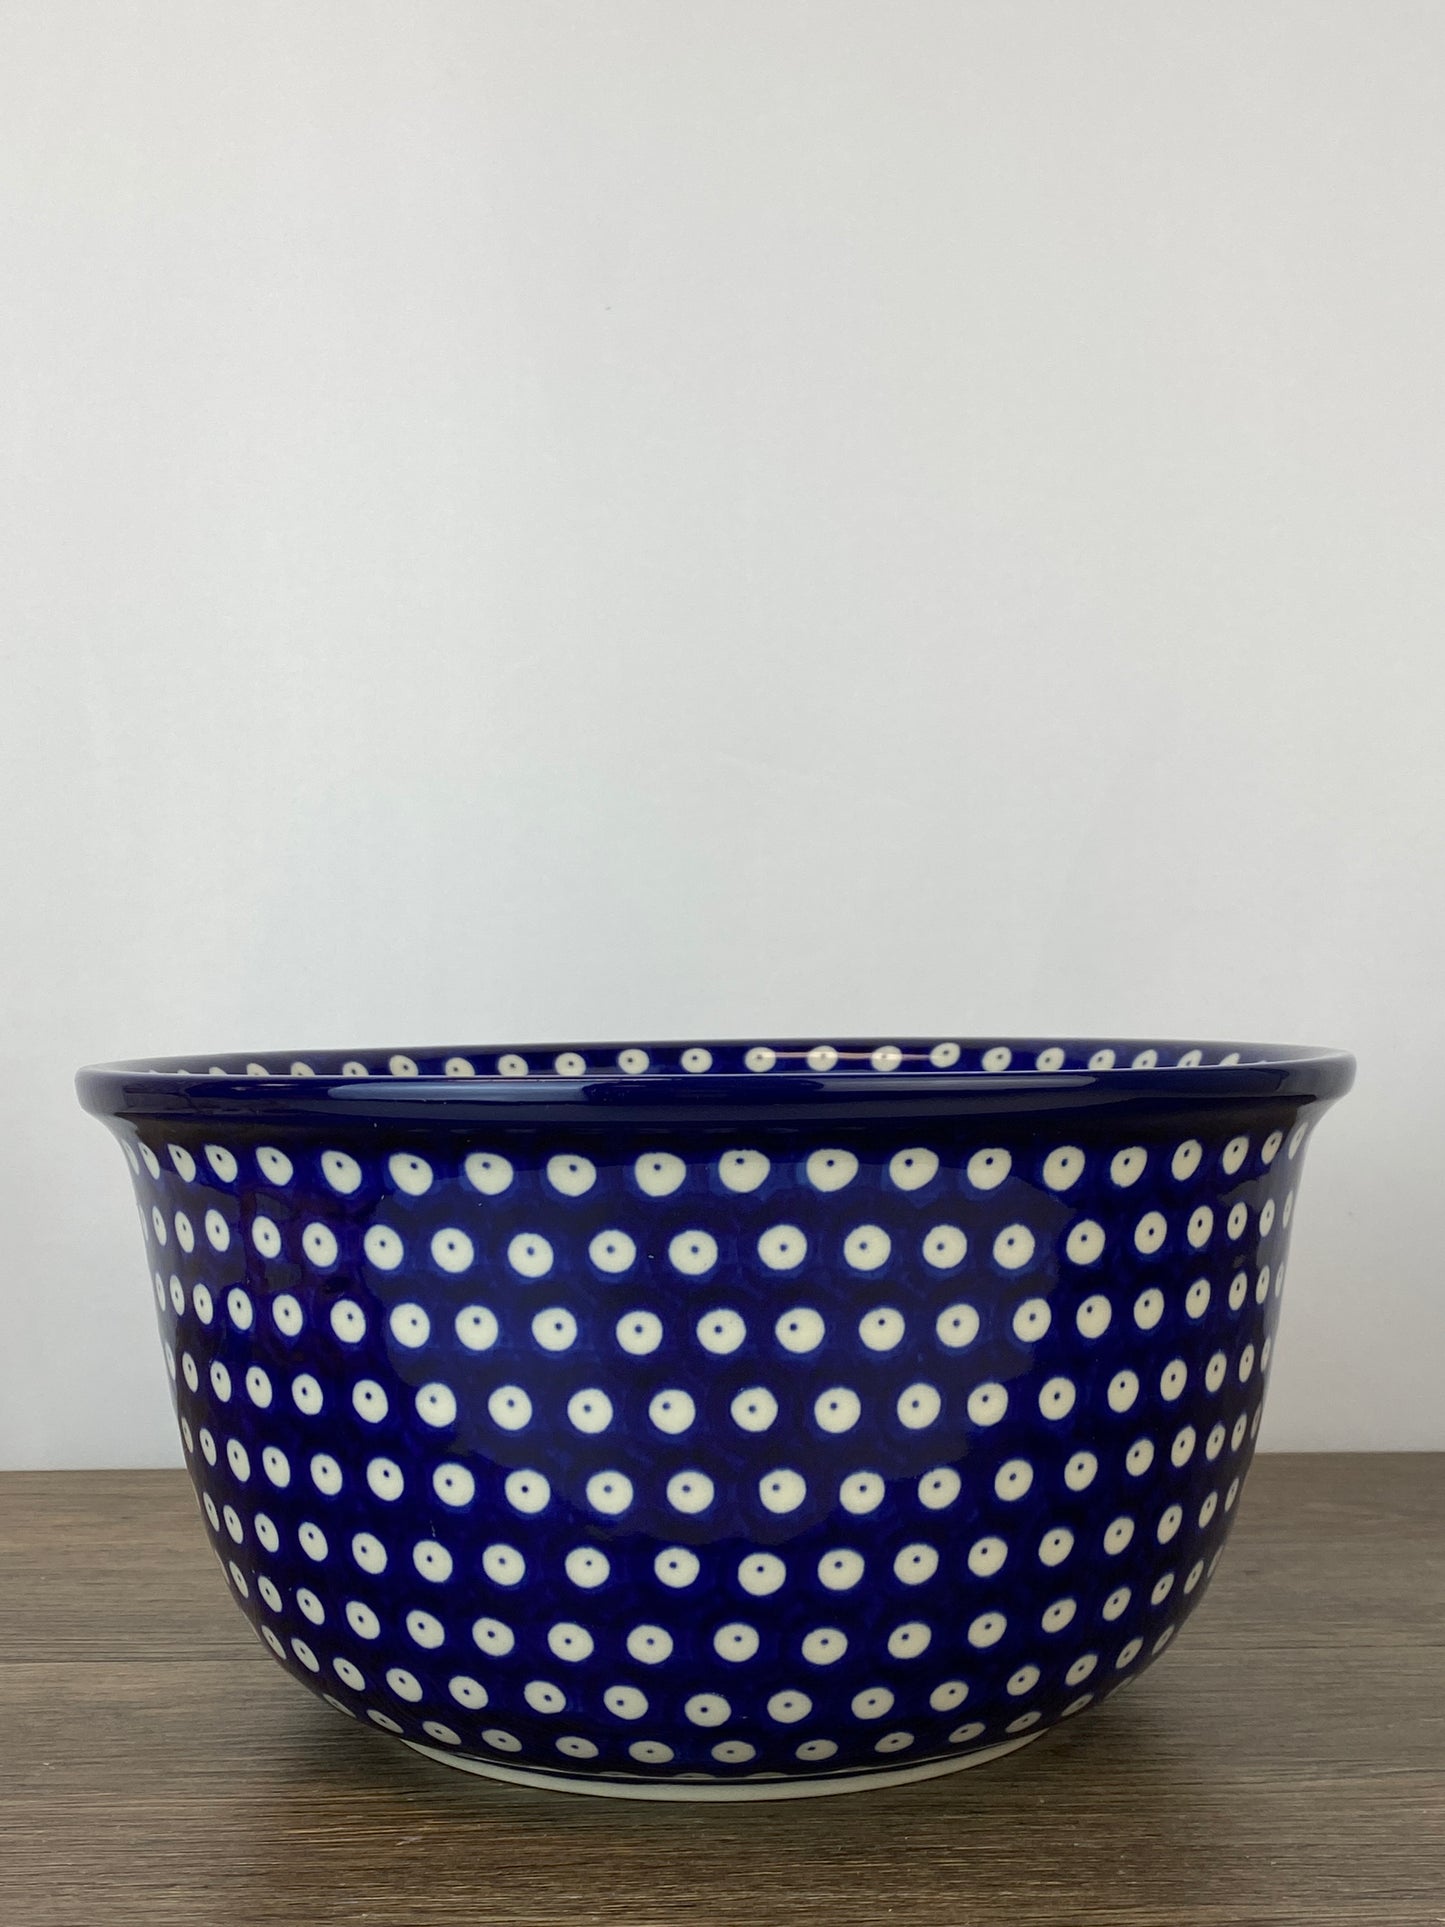 Large Mixing Bowl - Shape 113 - Pattern 70a